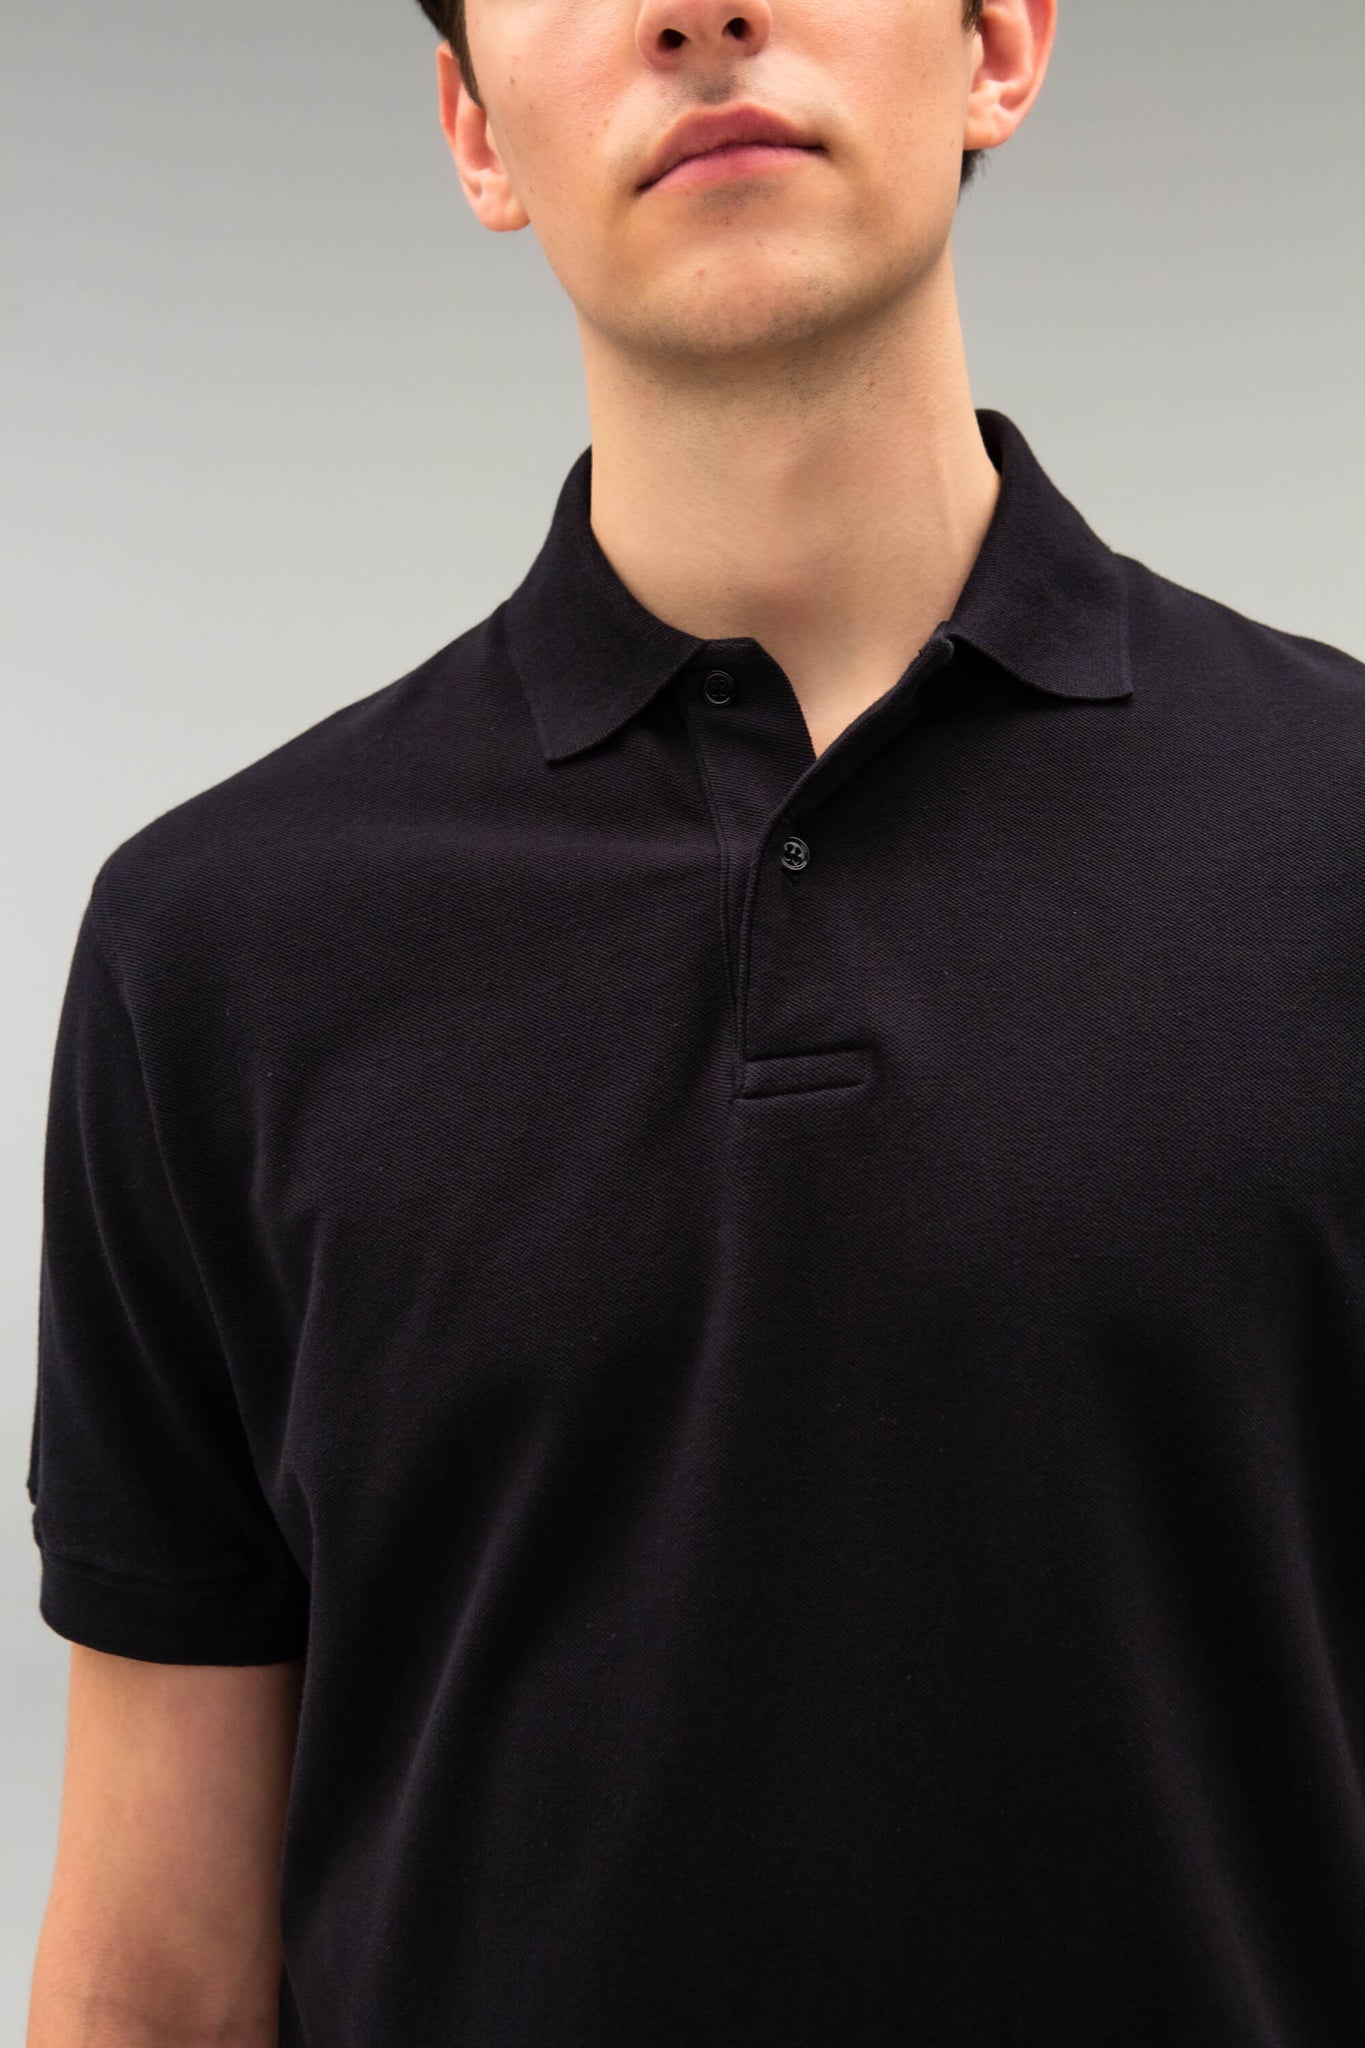 The Tall Piqué Polo - TALLFITS - Polohemd für lange Männer Kragen schwarz Perlmuttknöpfe